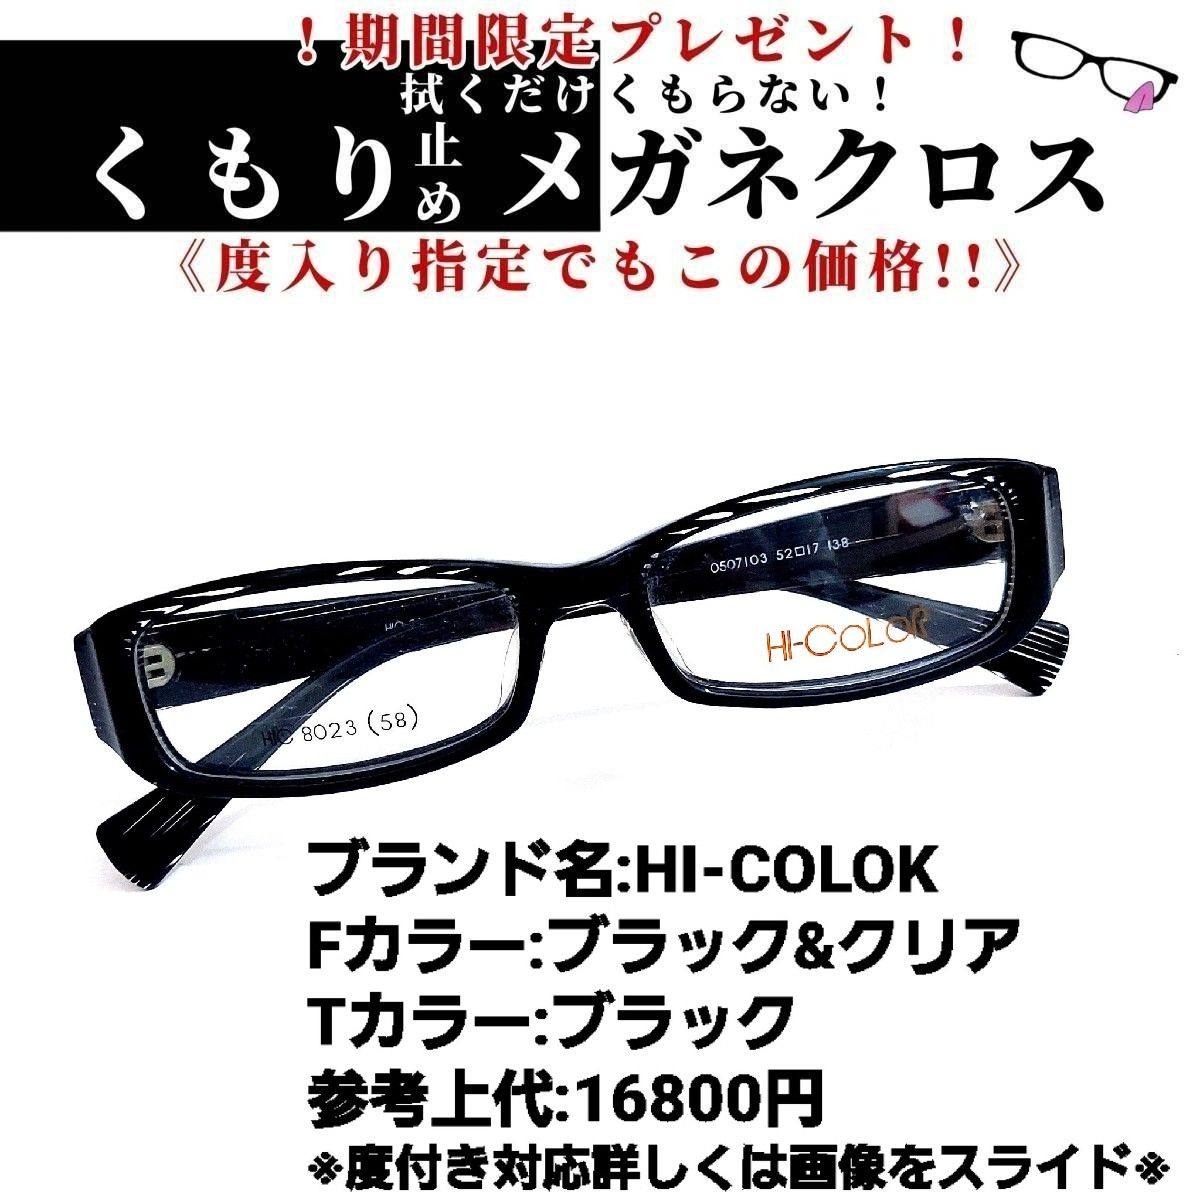 No.1254+メガネ HI-COLOK【度数入り込み価格】-